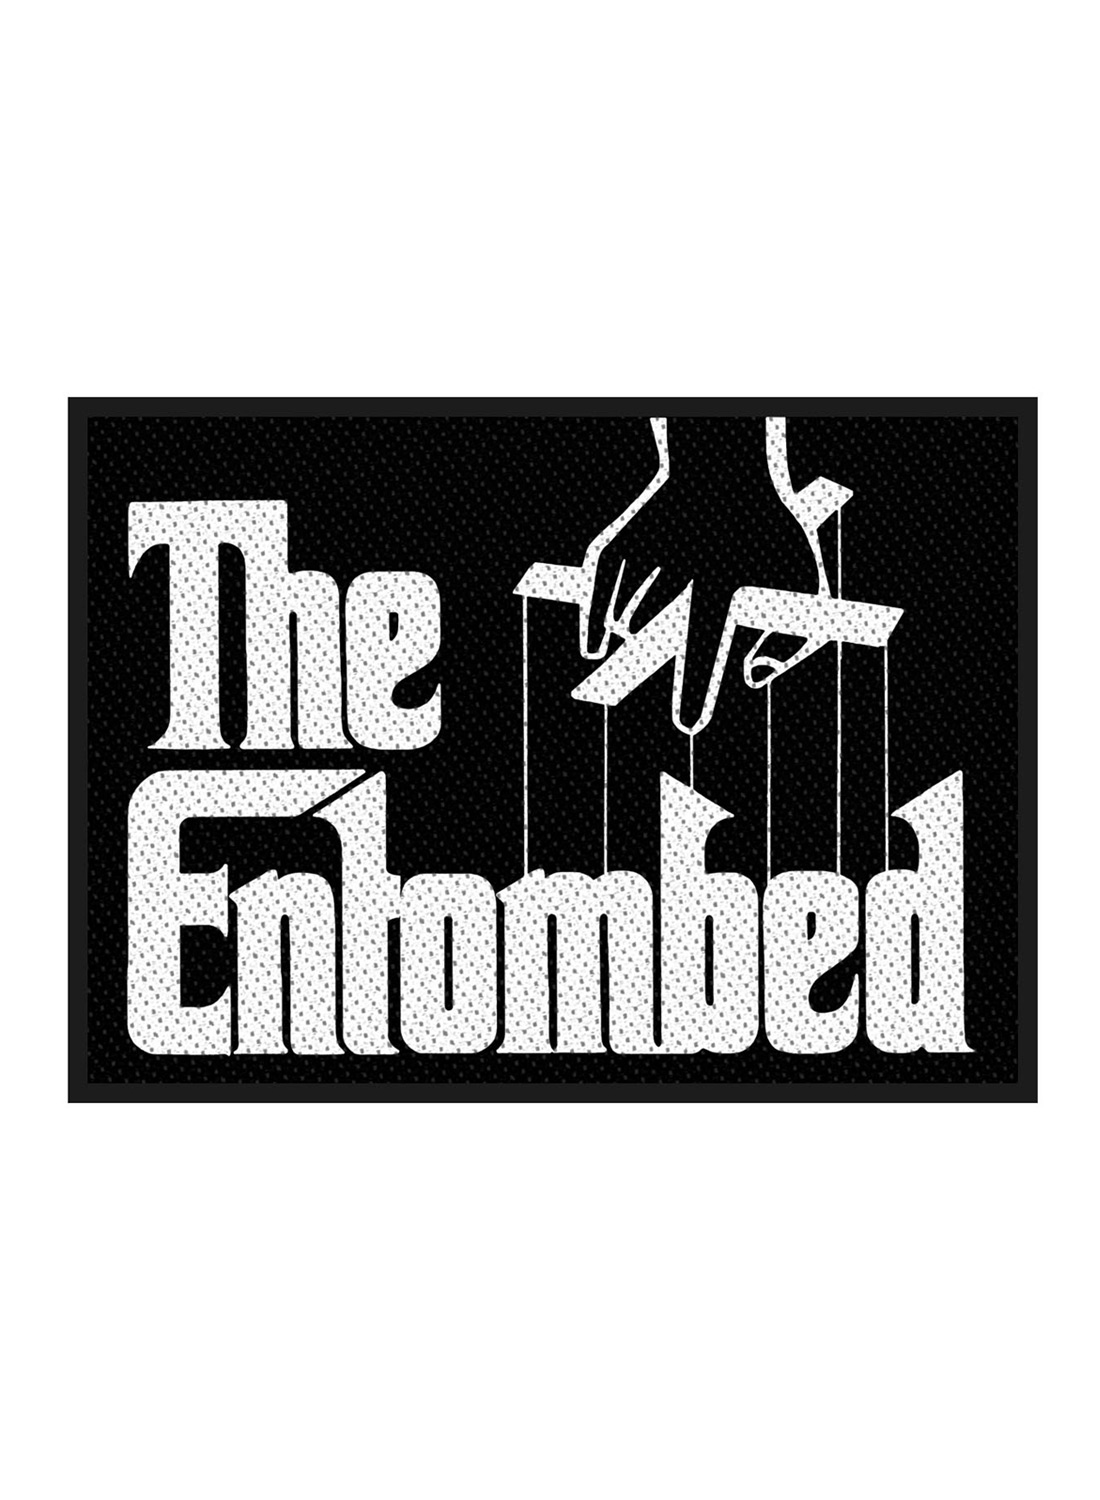 Entombed Godfather Logo Patch